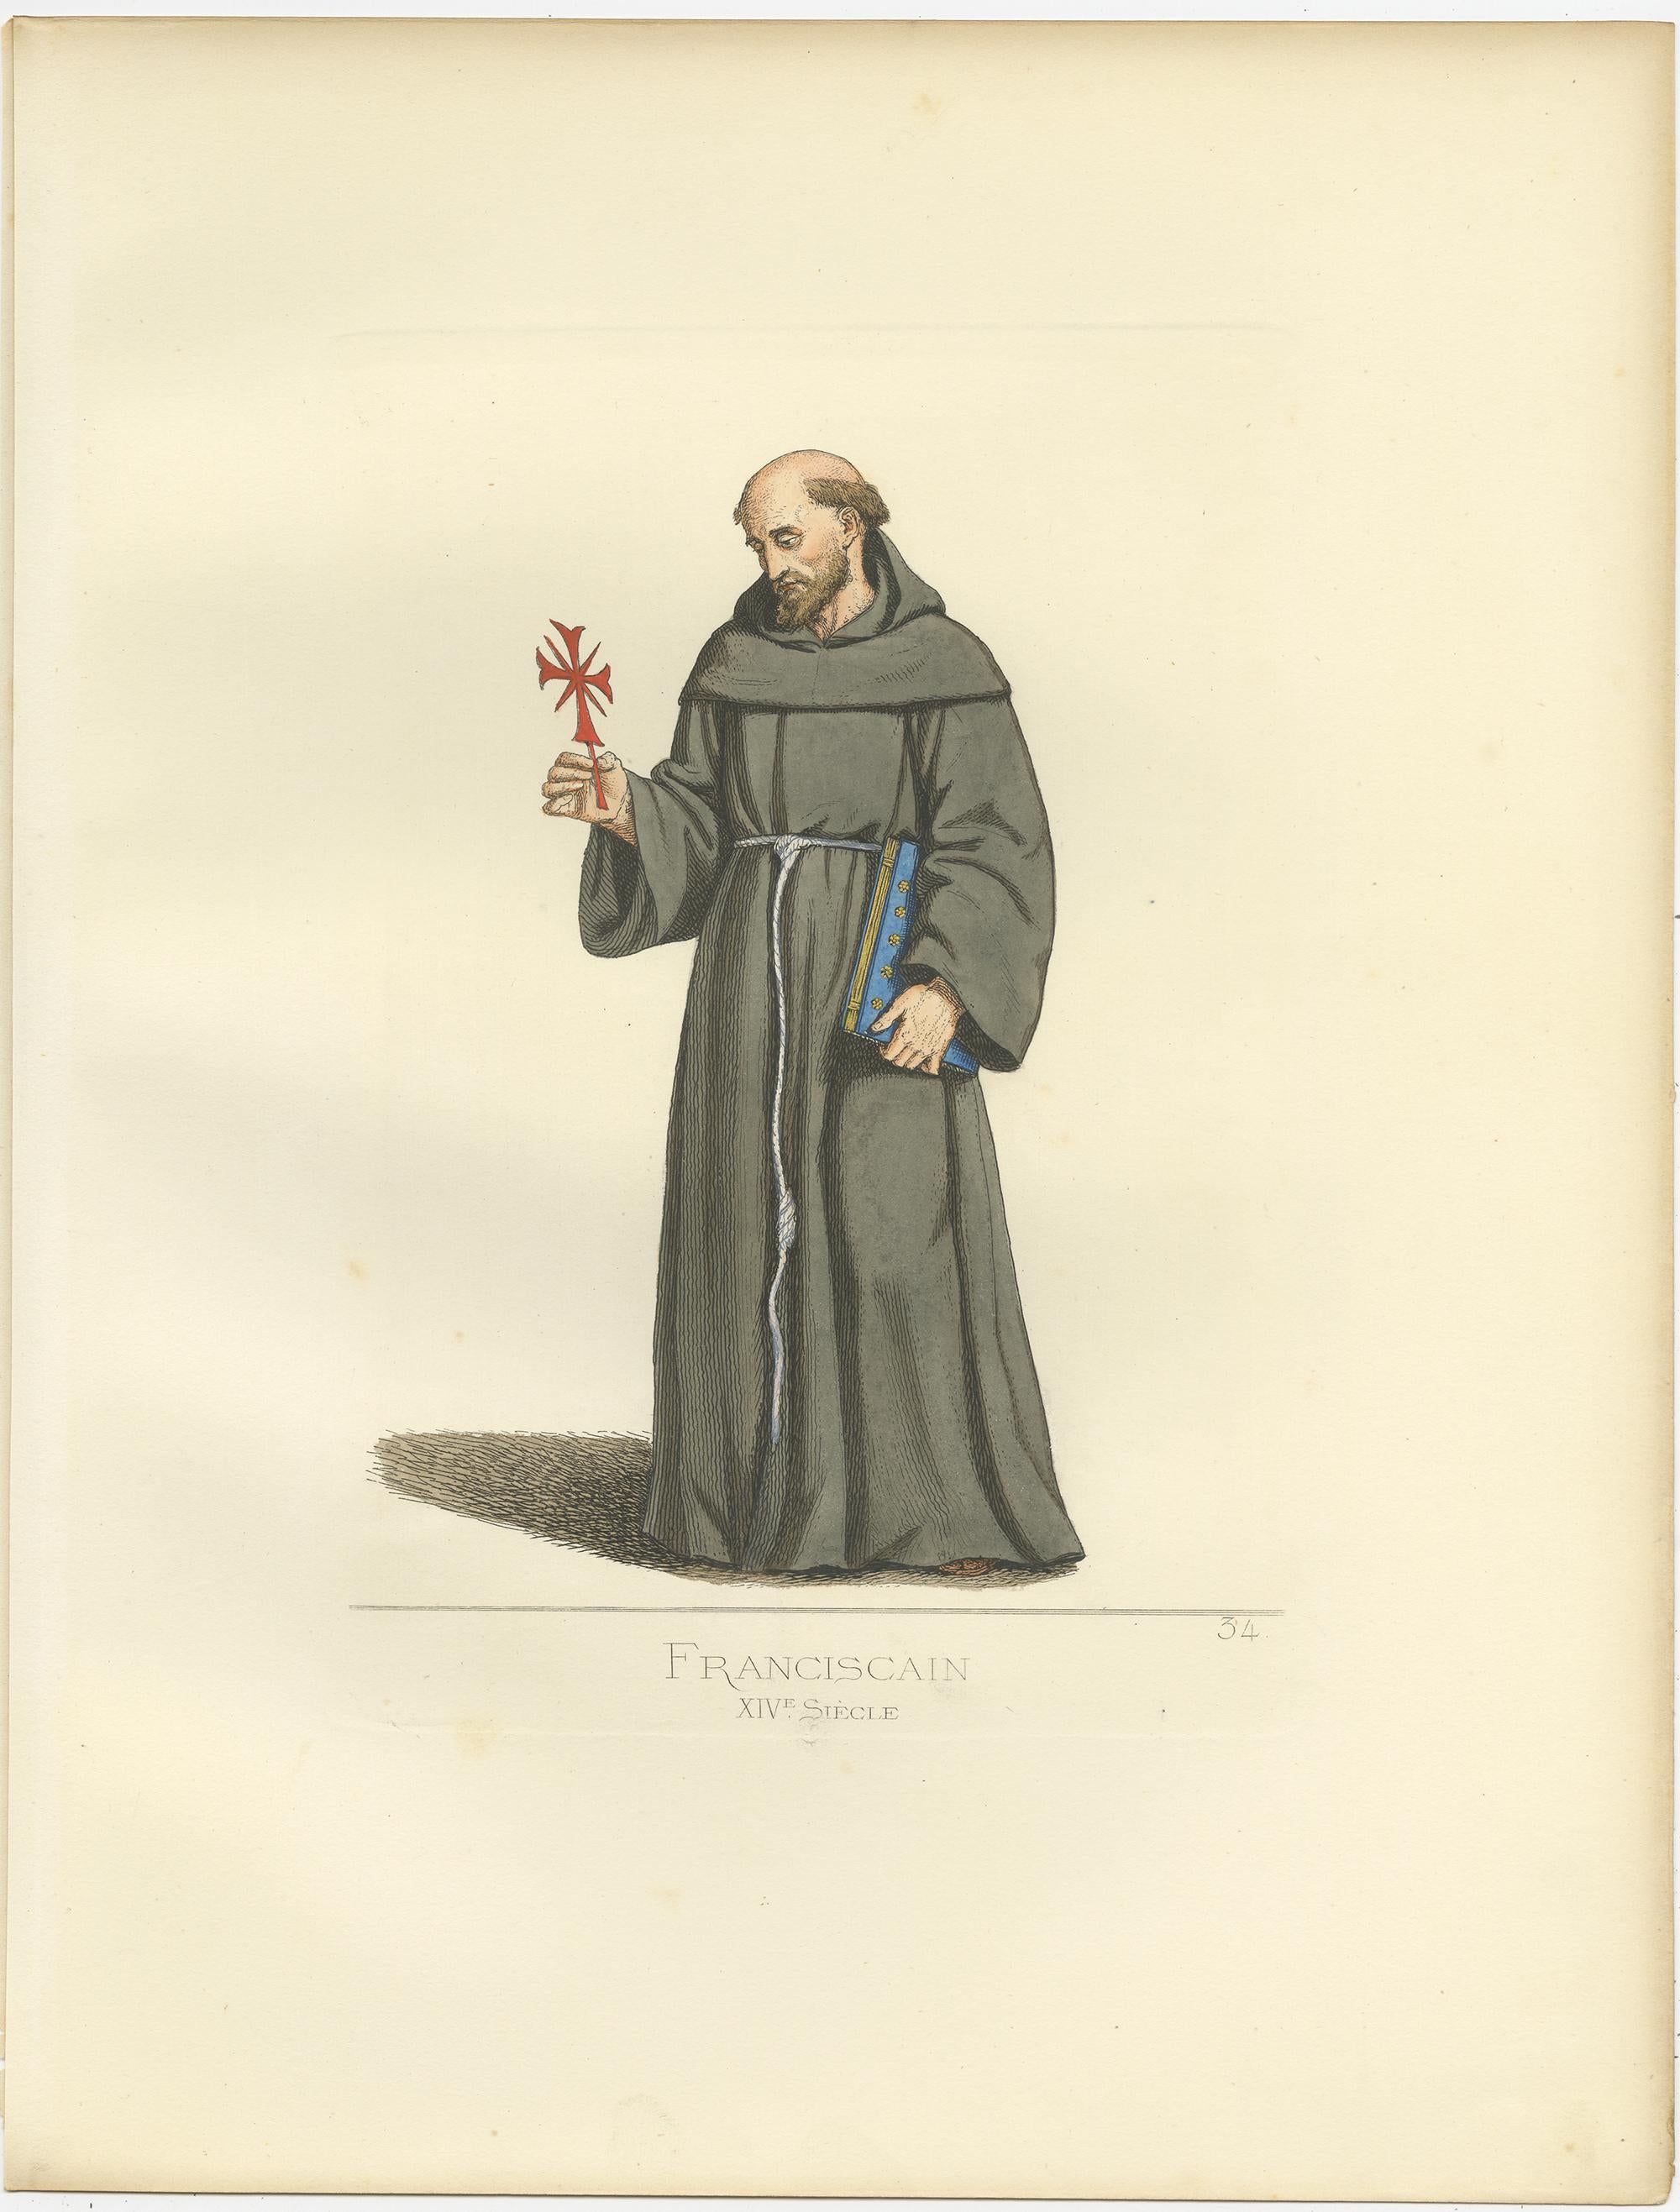 fransican monk